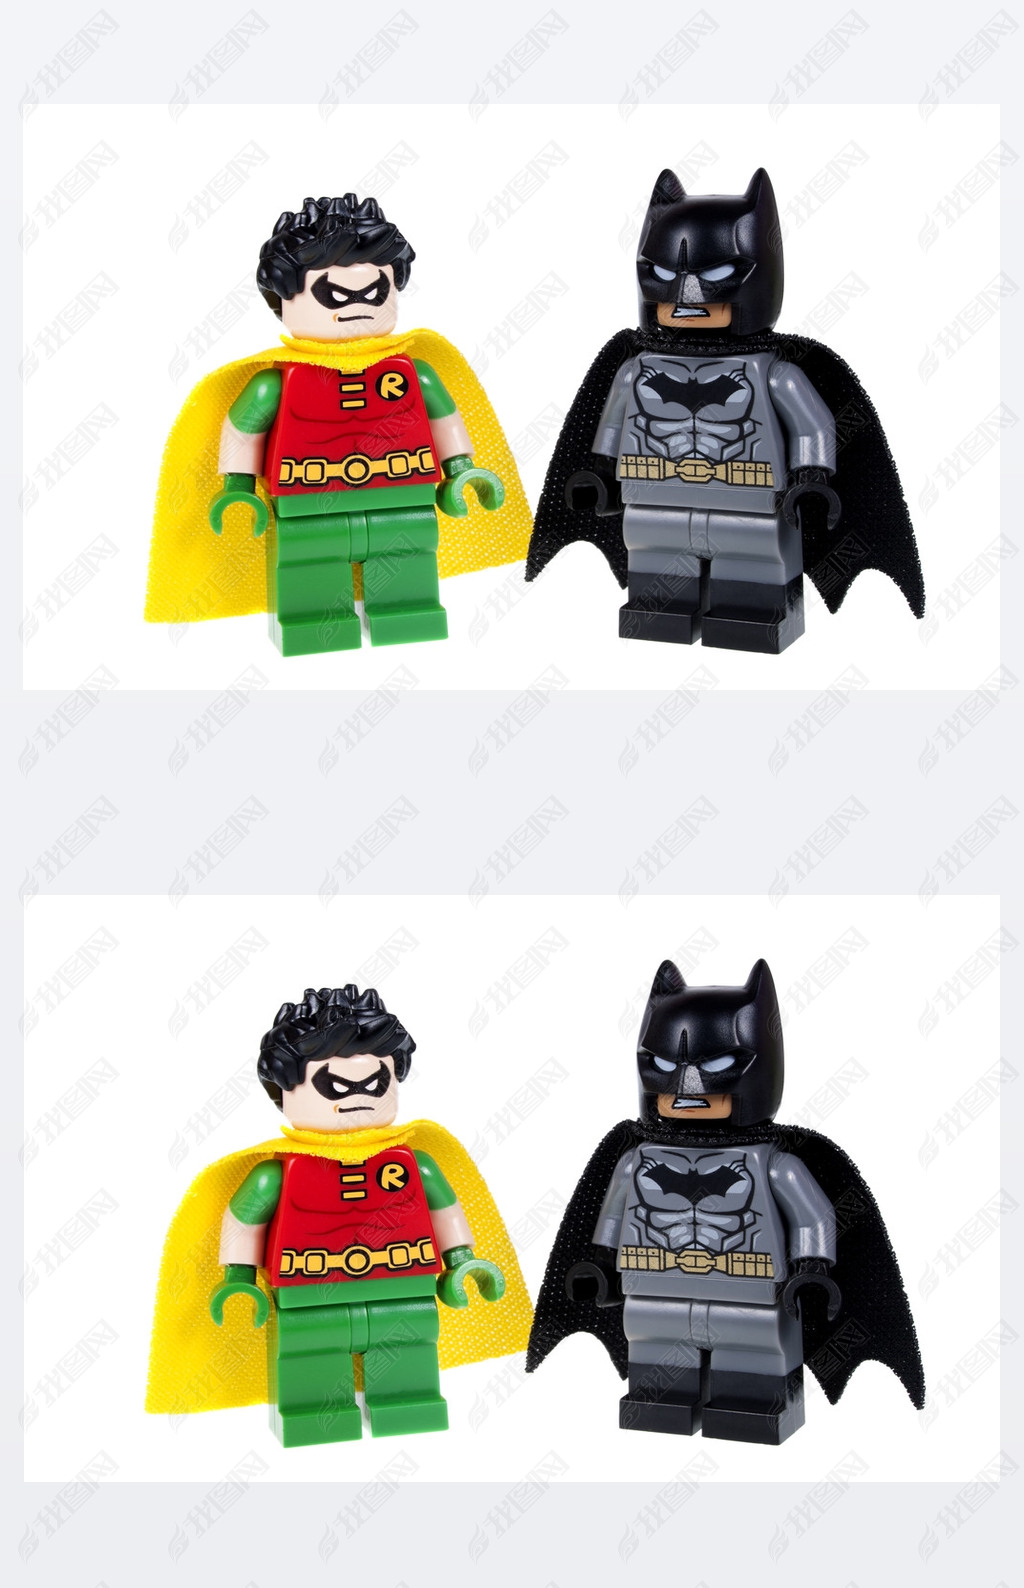 Batman and Robin Lego Minifigure